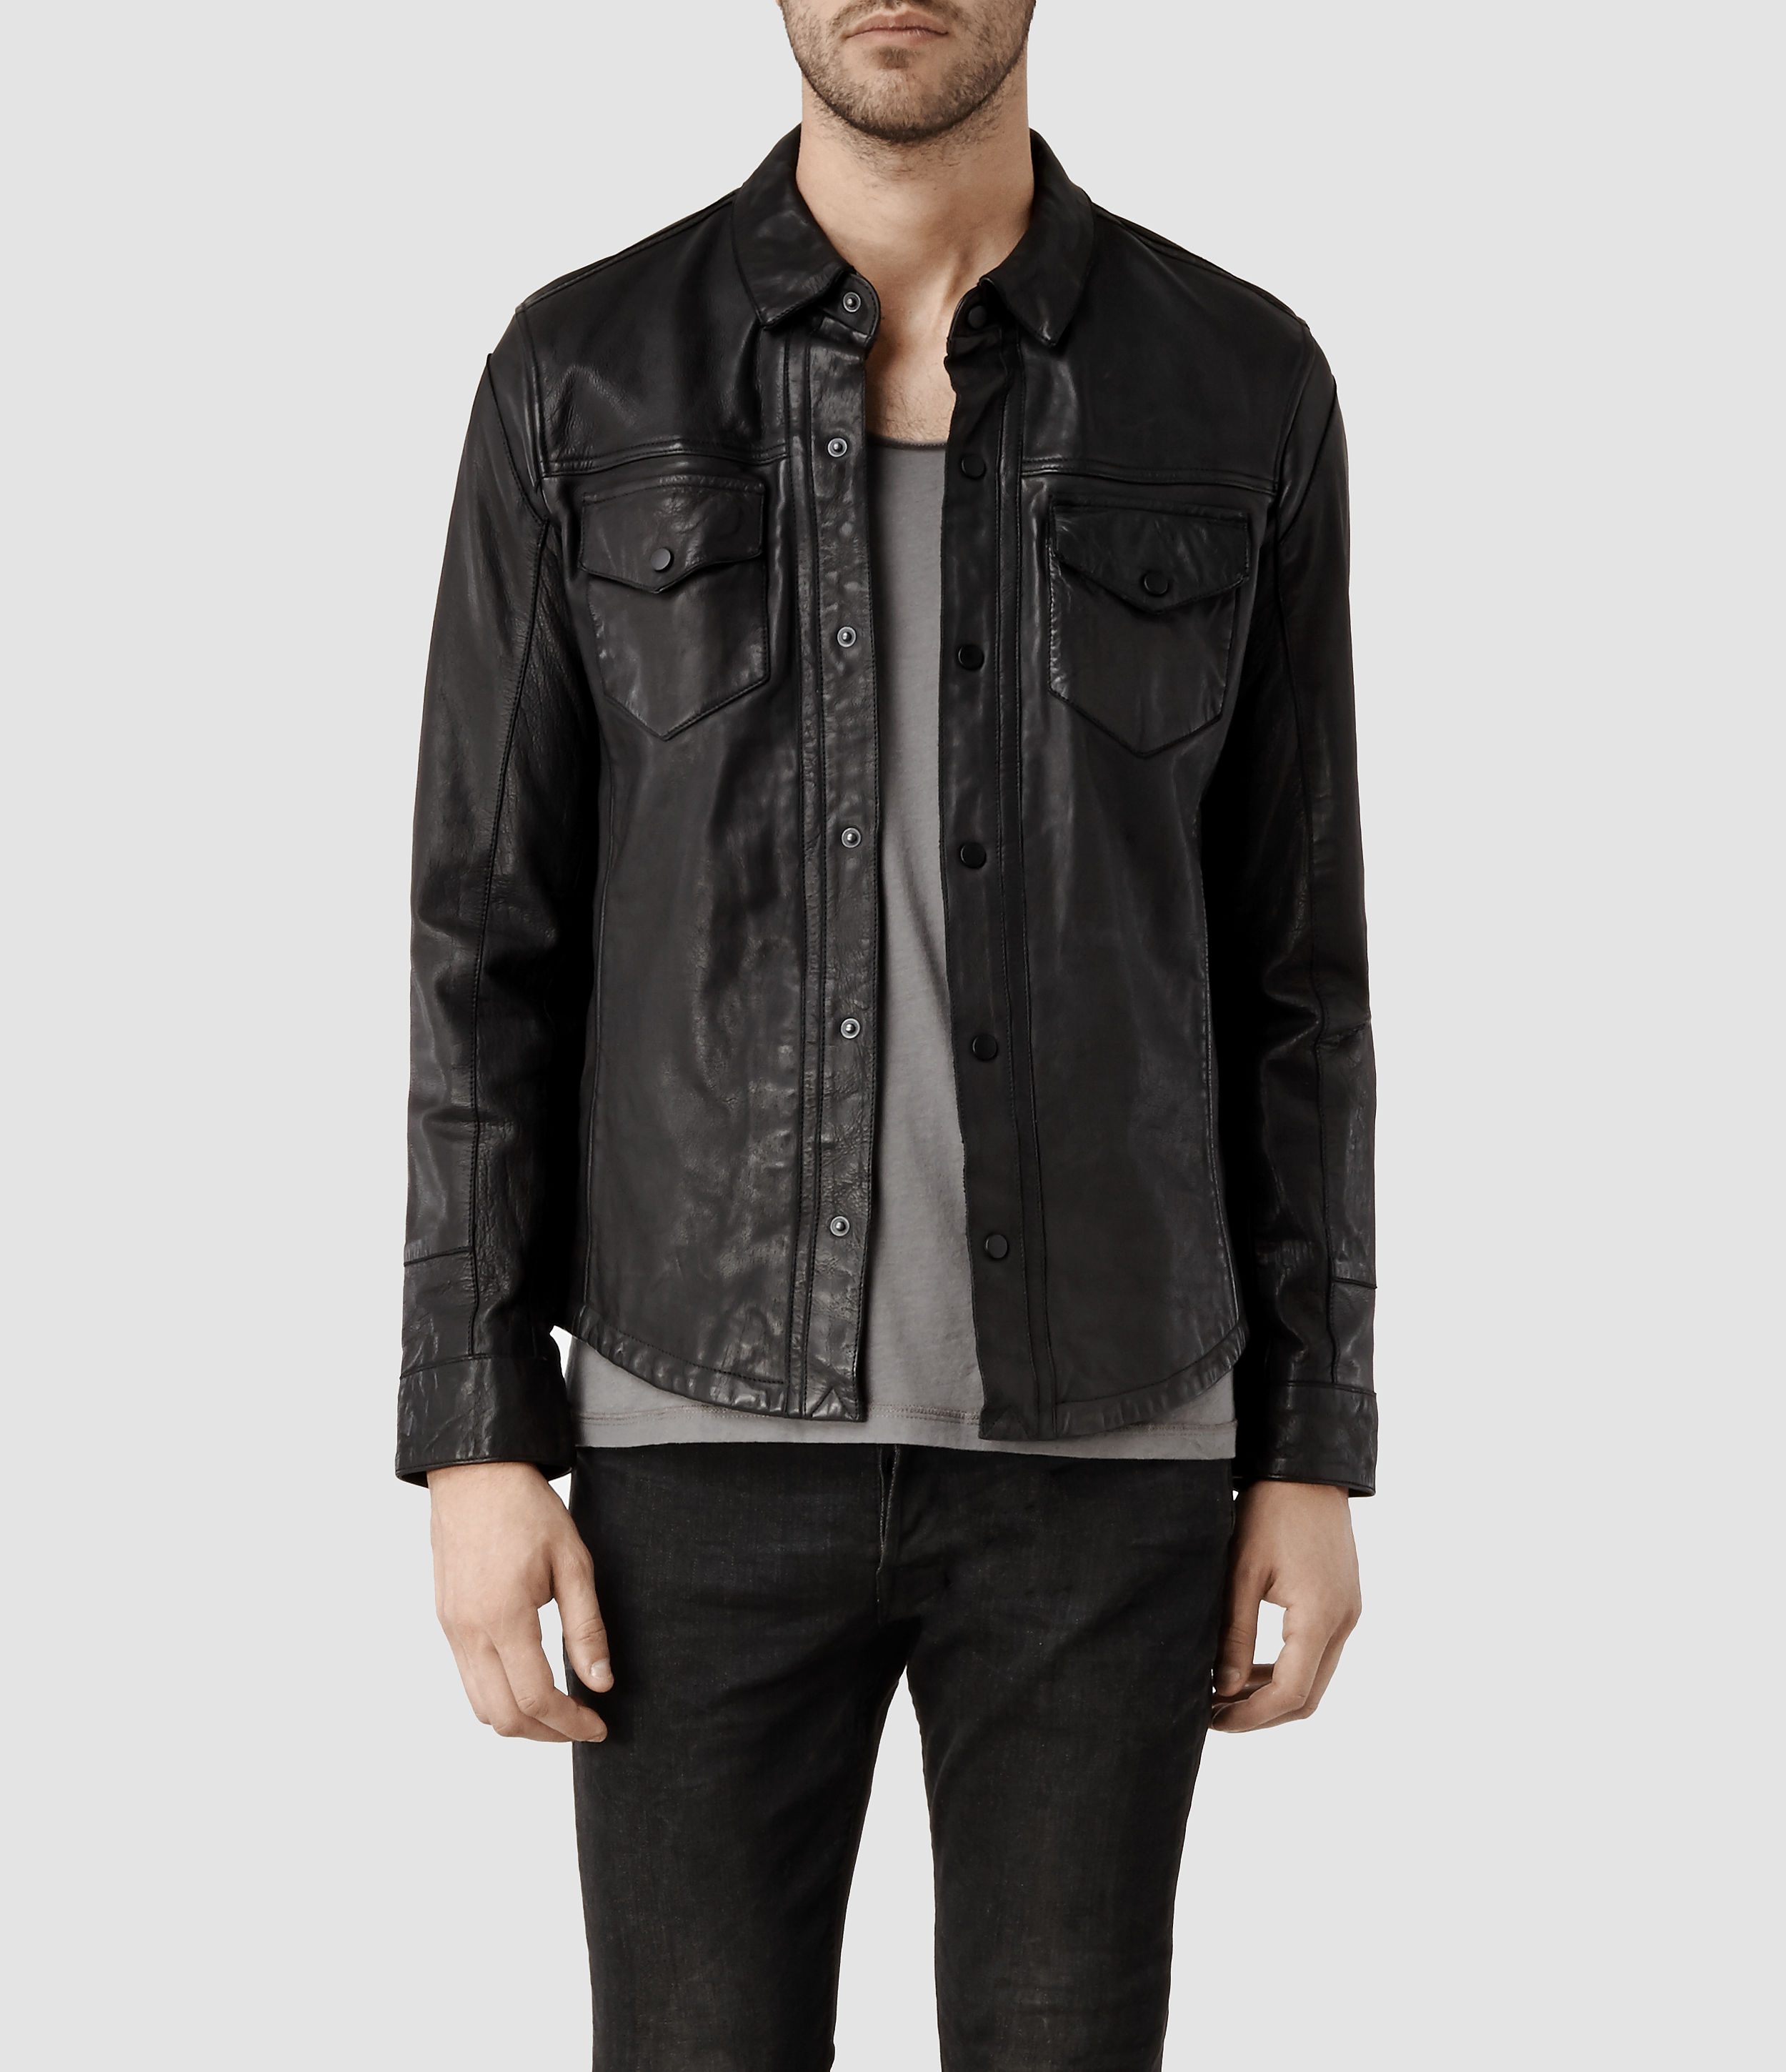 Lyst - Allsaints Raydon Leather Shirt in Black for Men